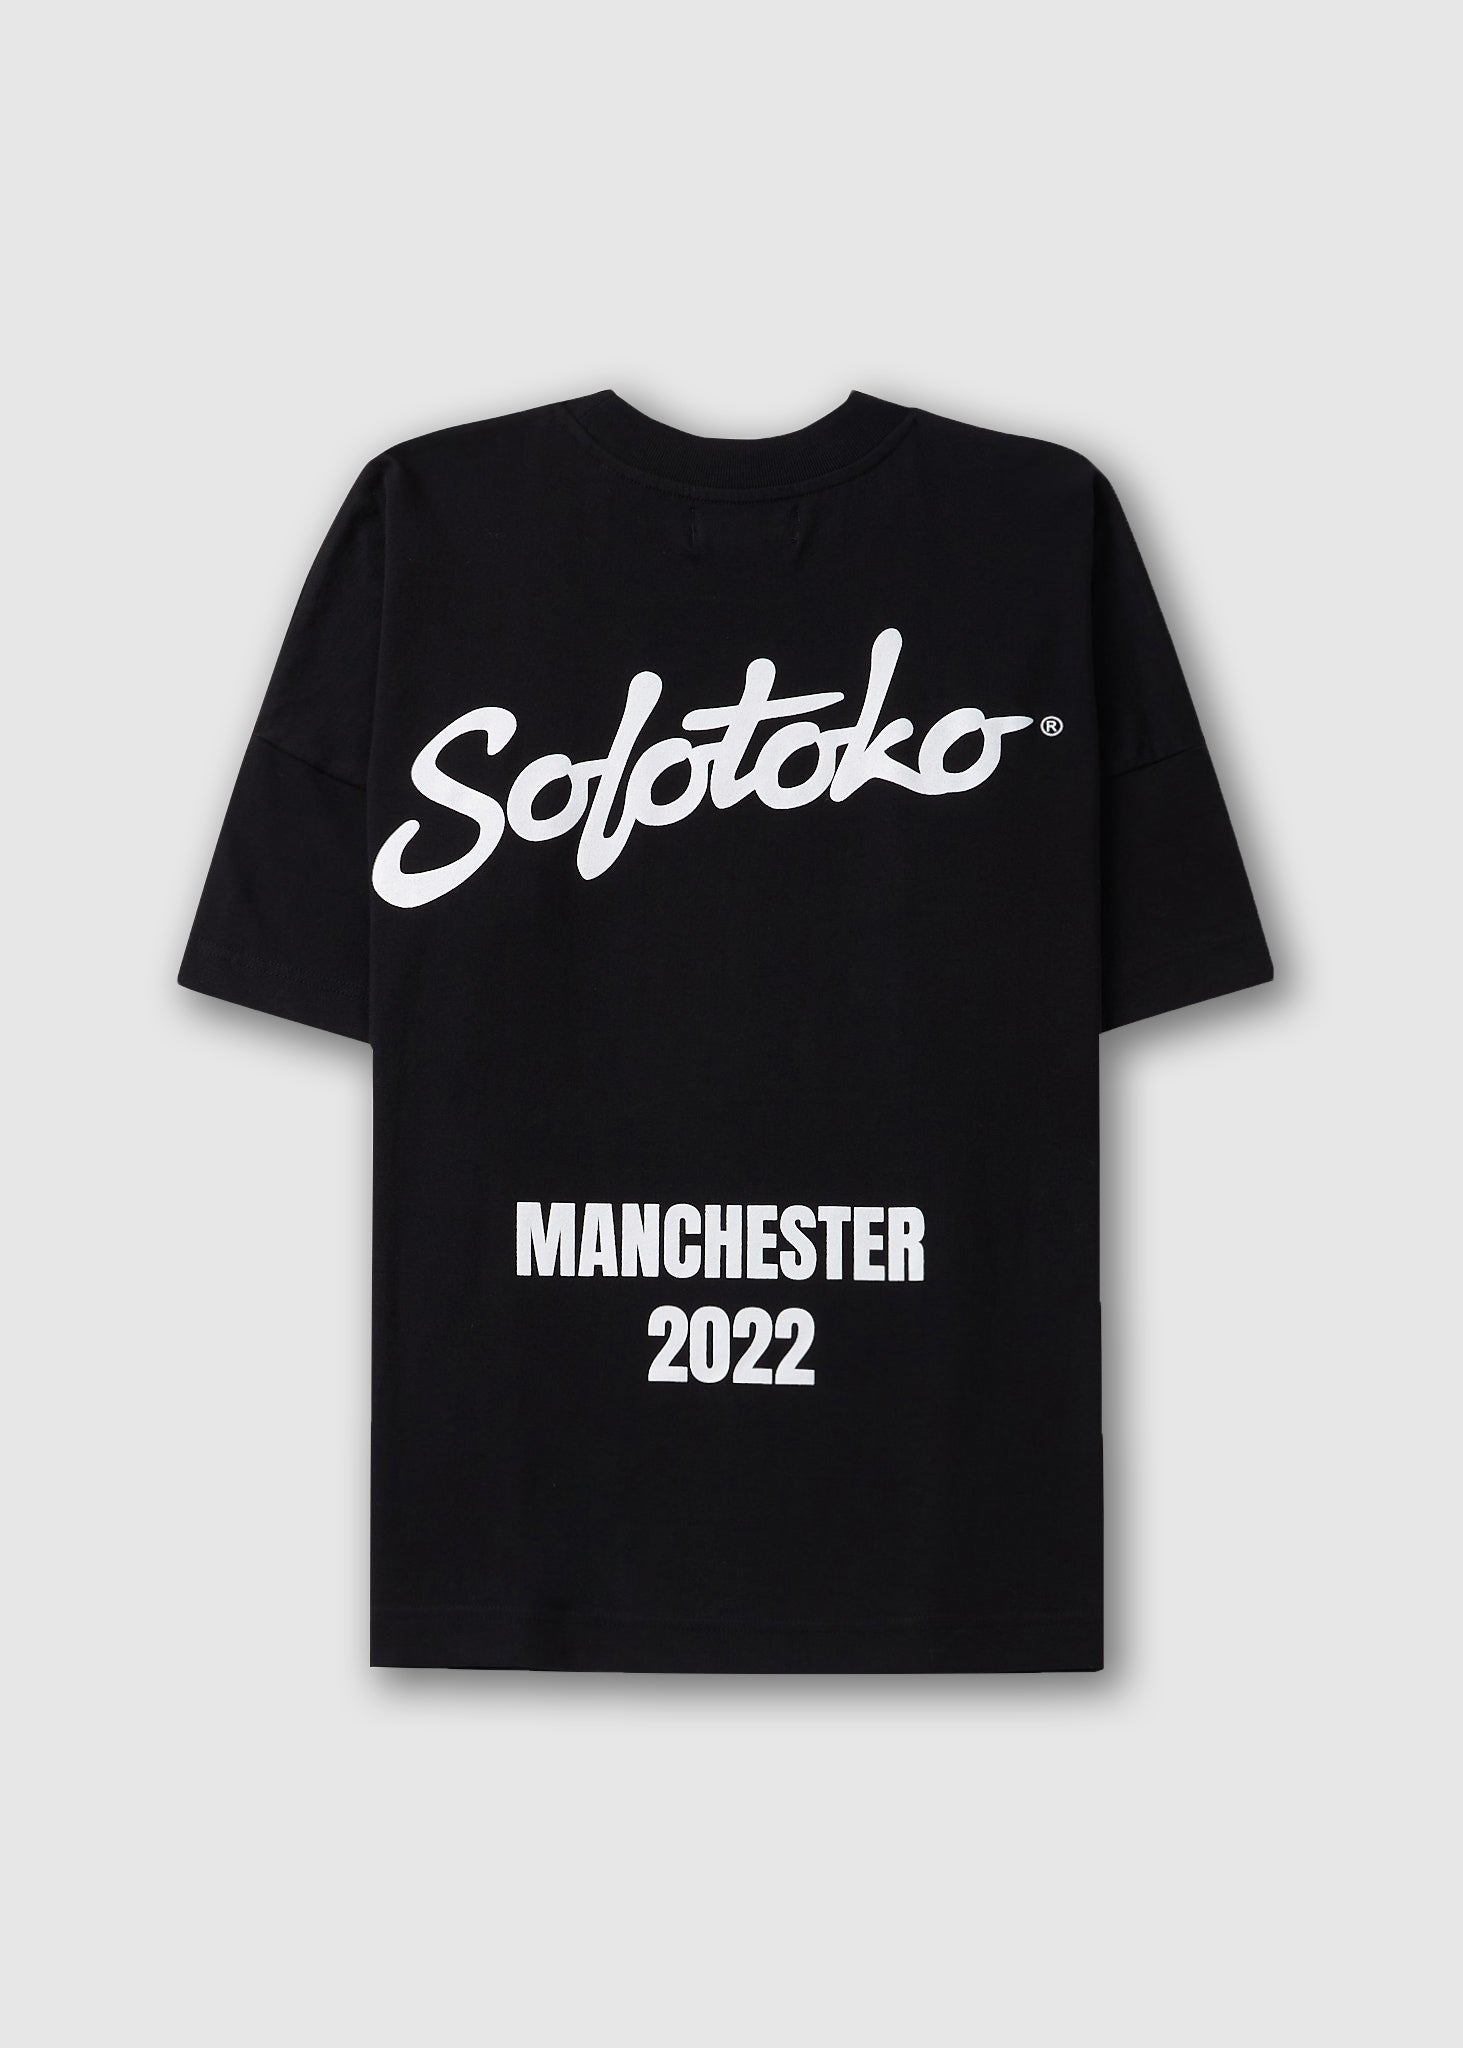 SOLOTOKO MANCHESTER 2022 BLACK T-SHIRT